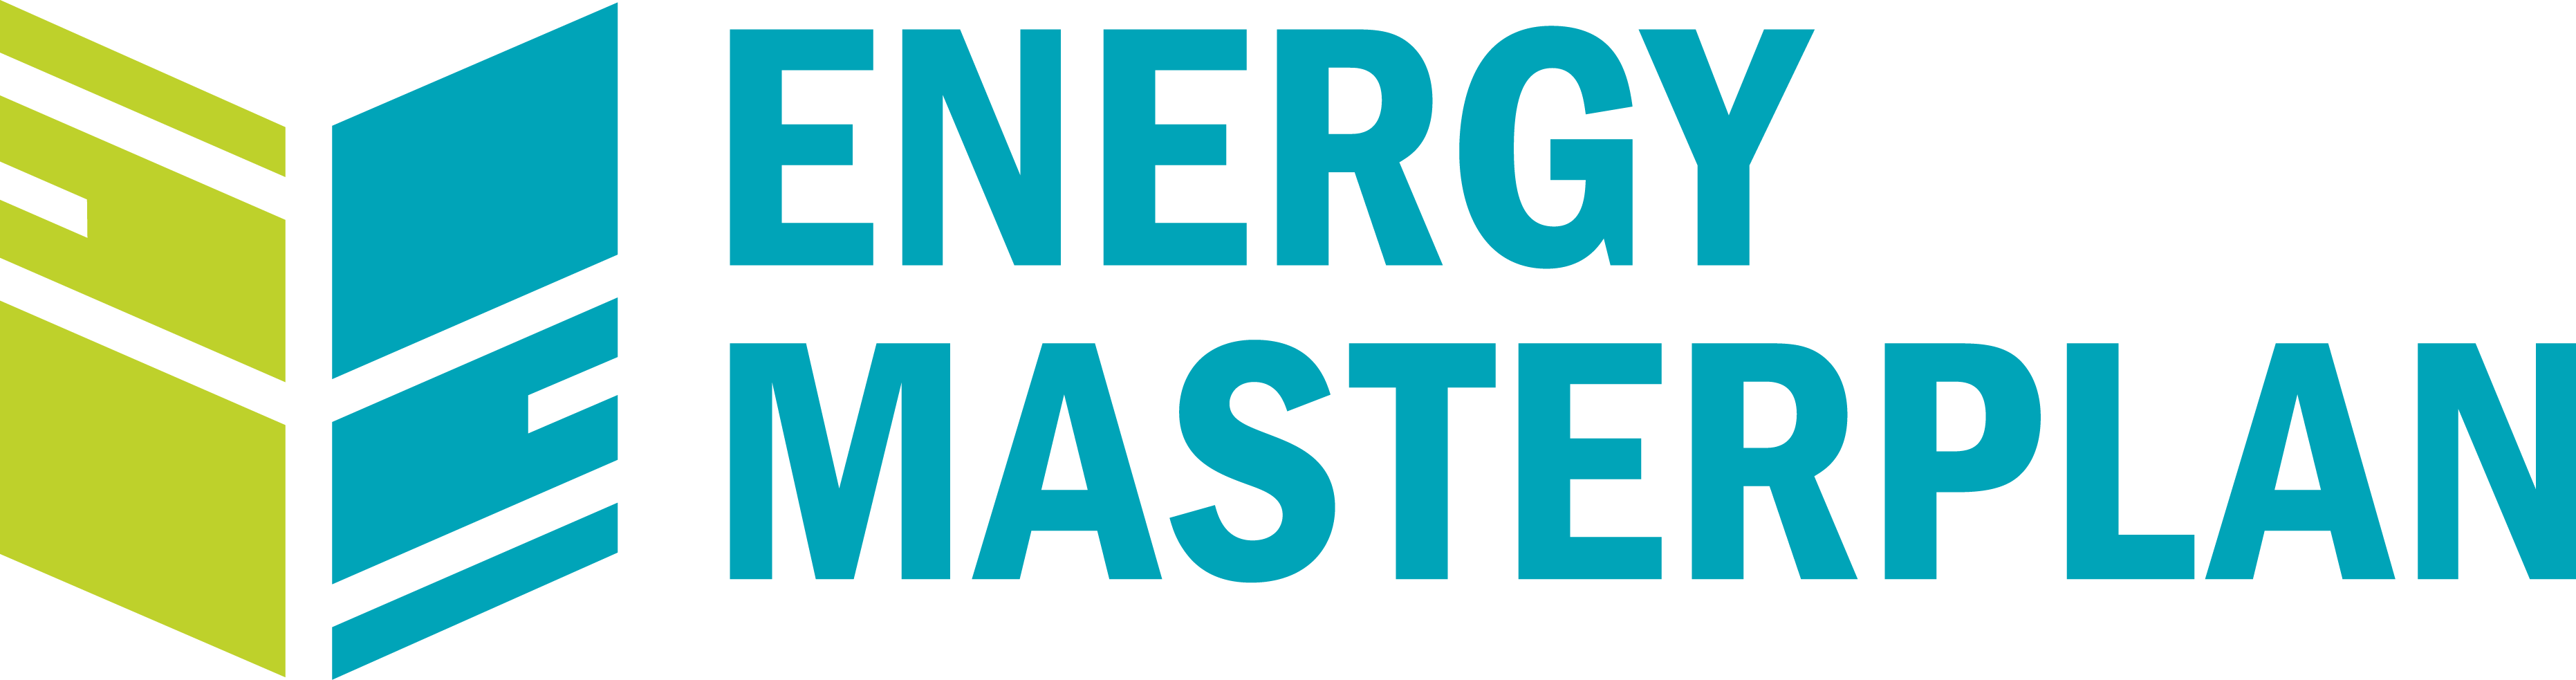 Energy Masterplan logo